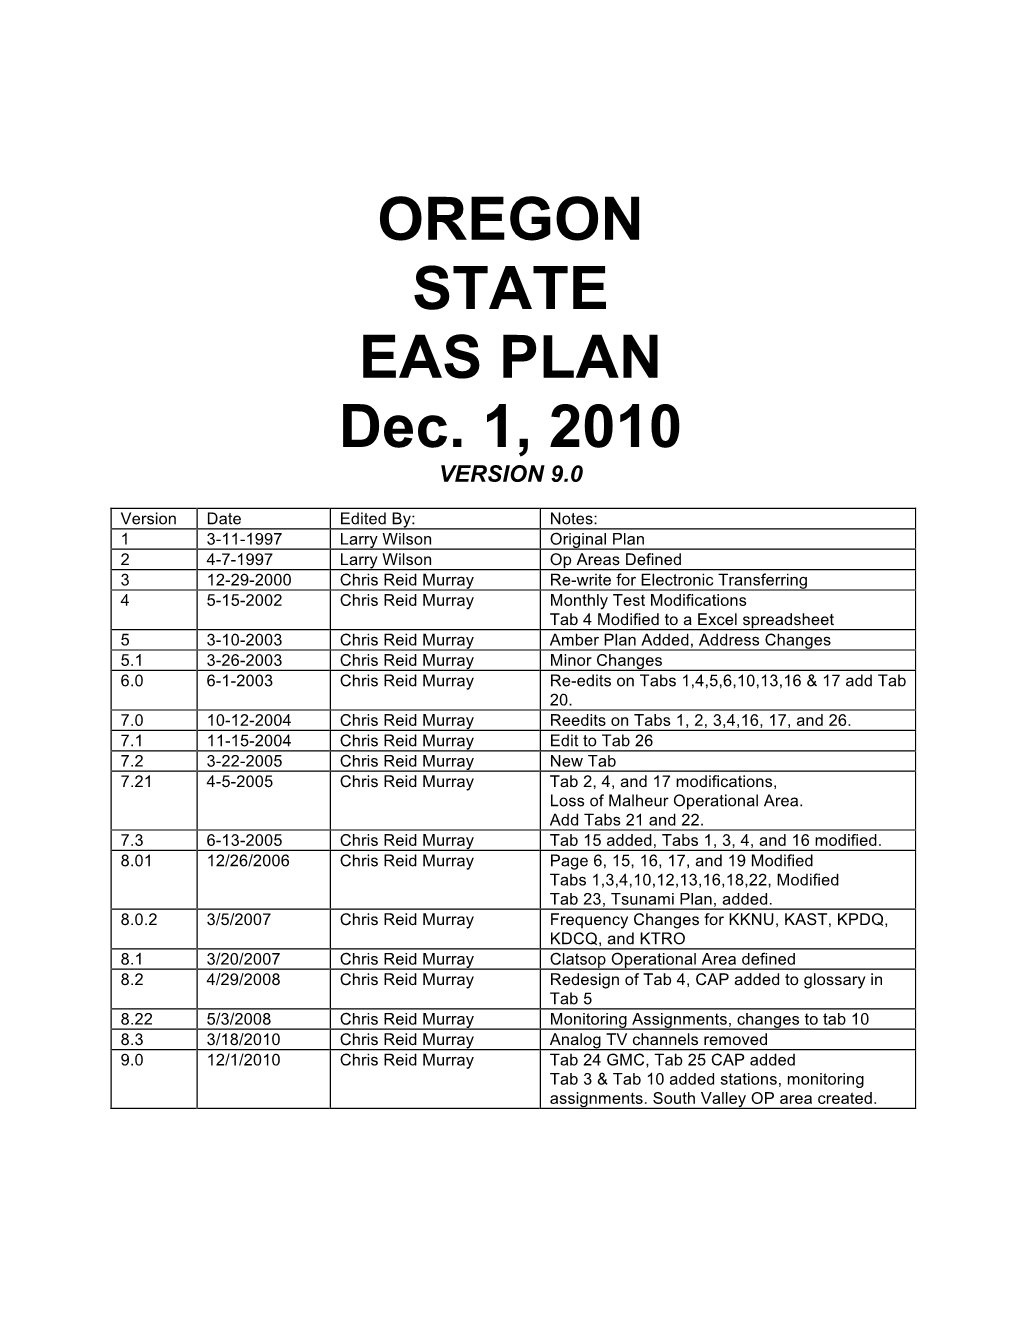 State EAS Plan, Ver 9.0 12-1-10